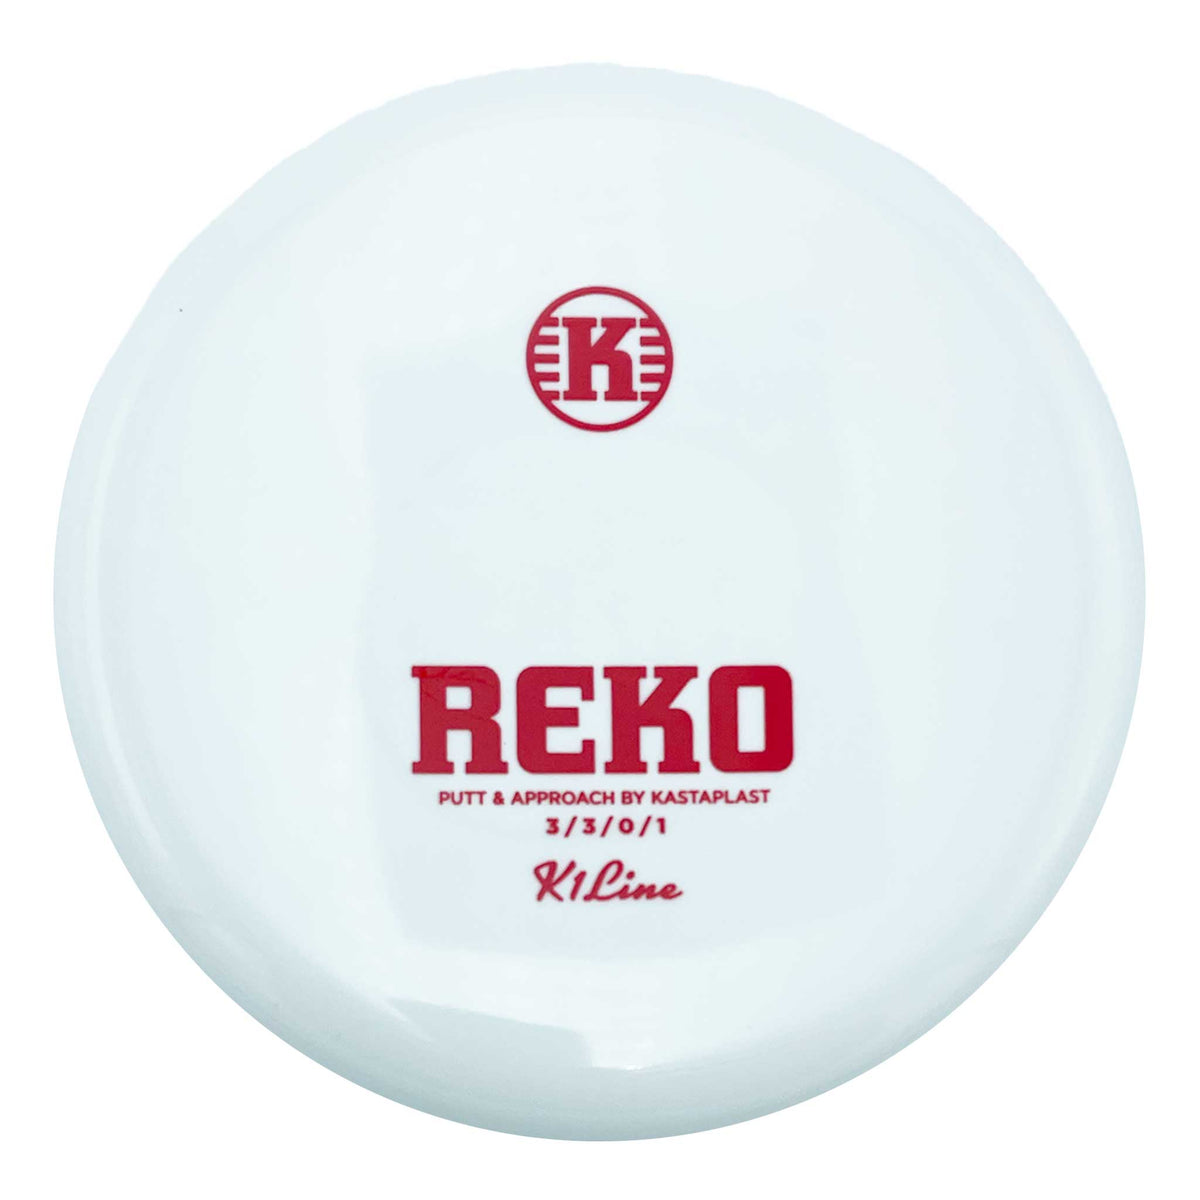 Kastaplast K1 Reko putter and approach - White / Red